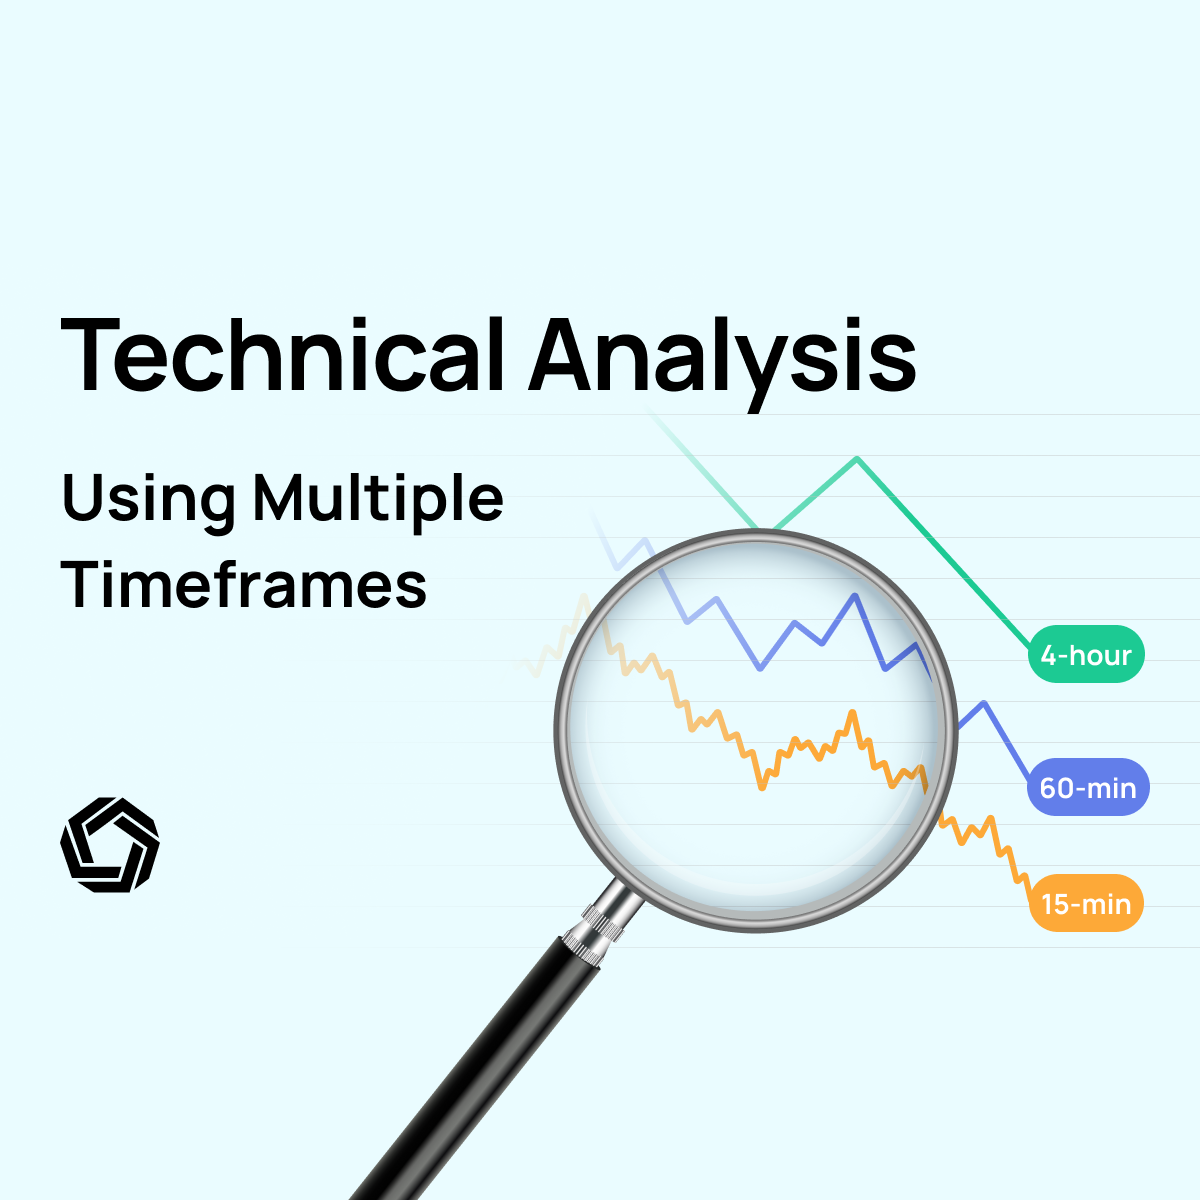 Technical Analysis Using Multiple Timeframes